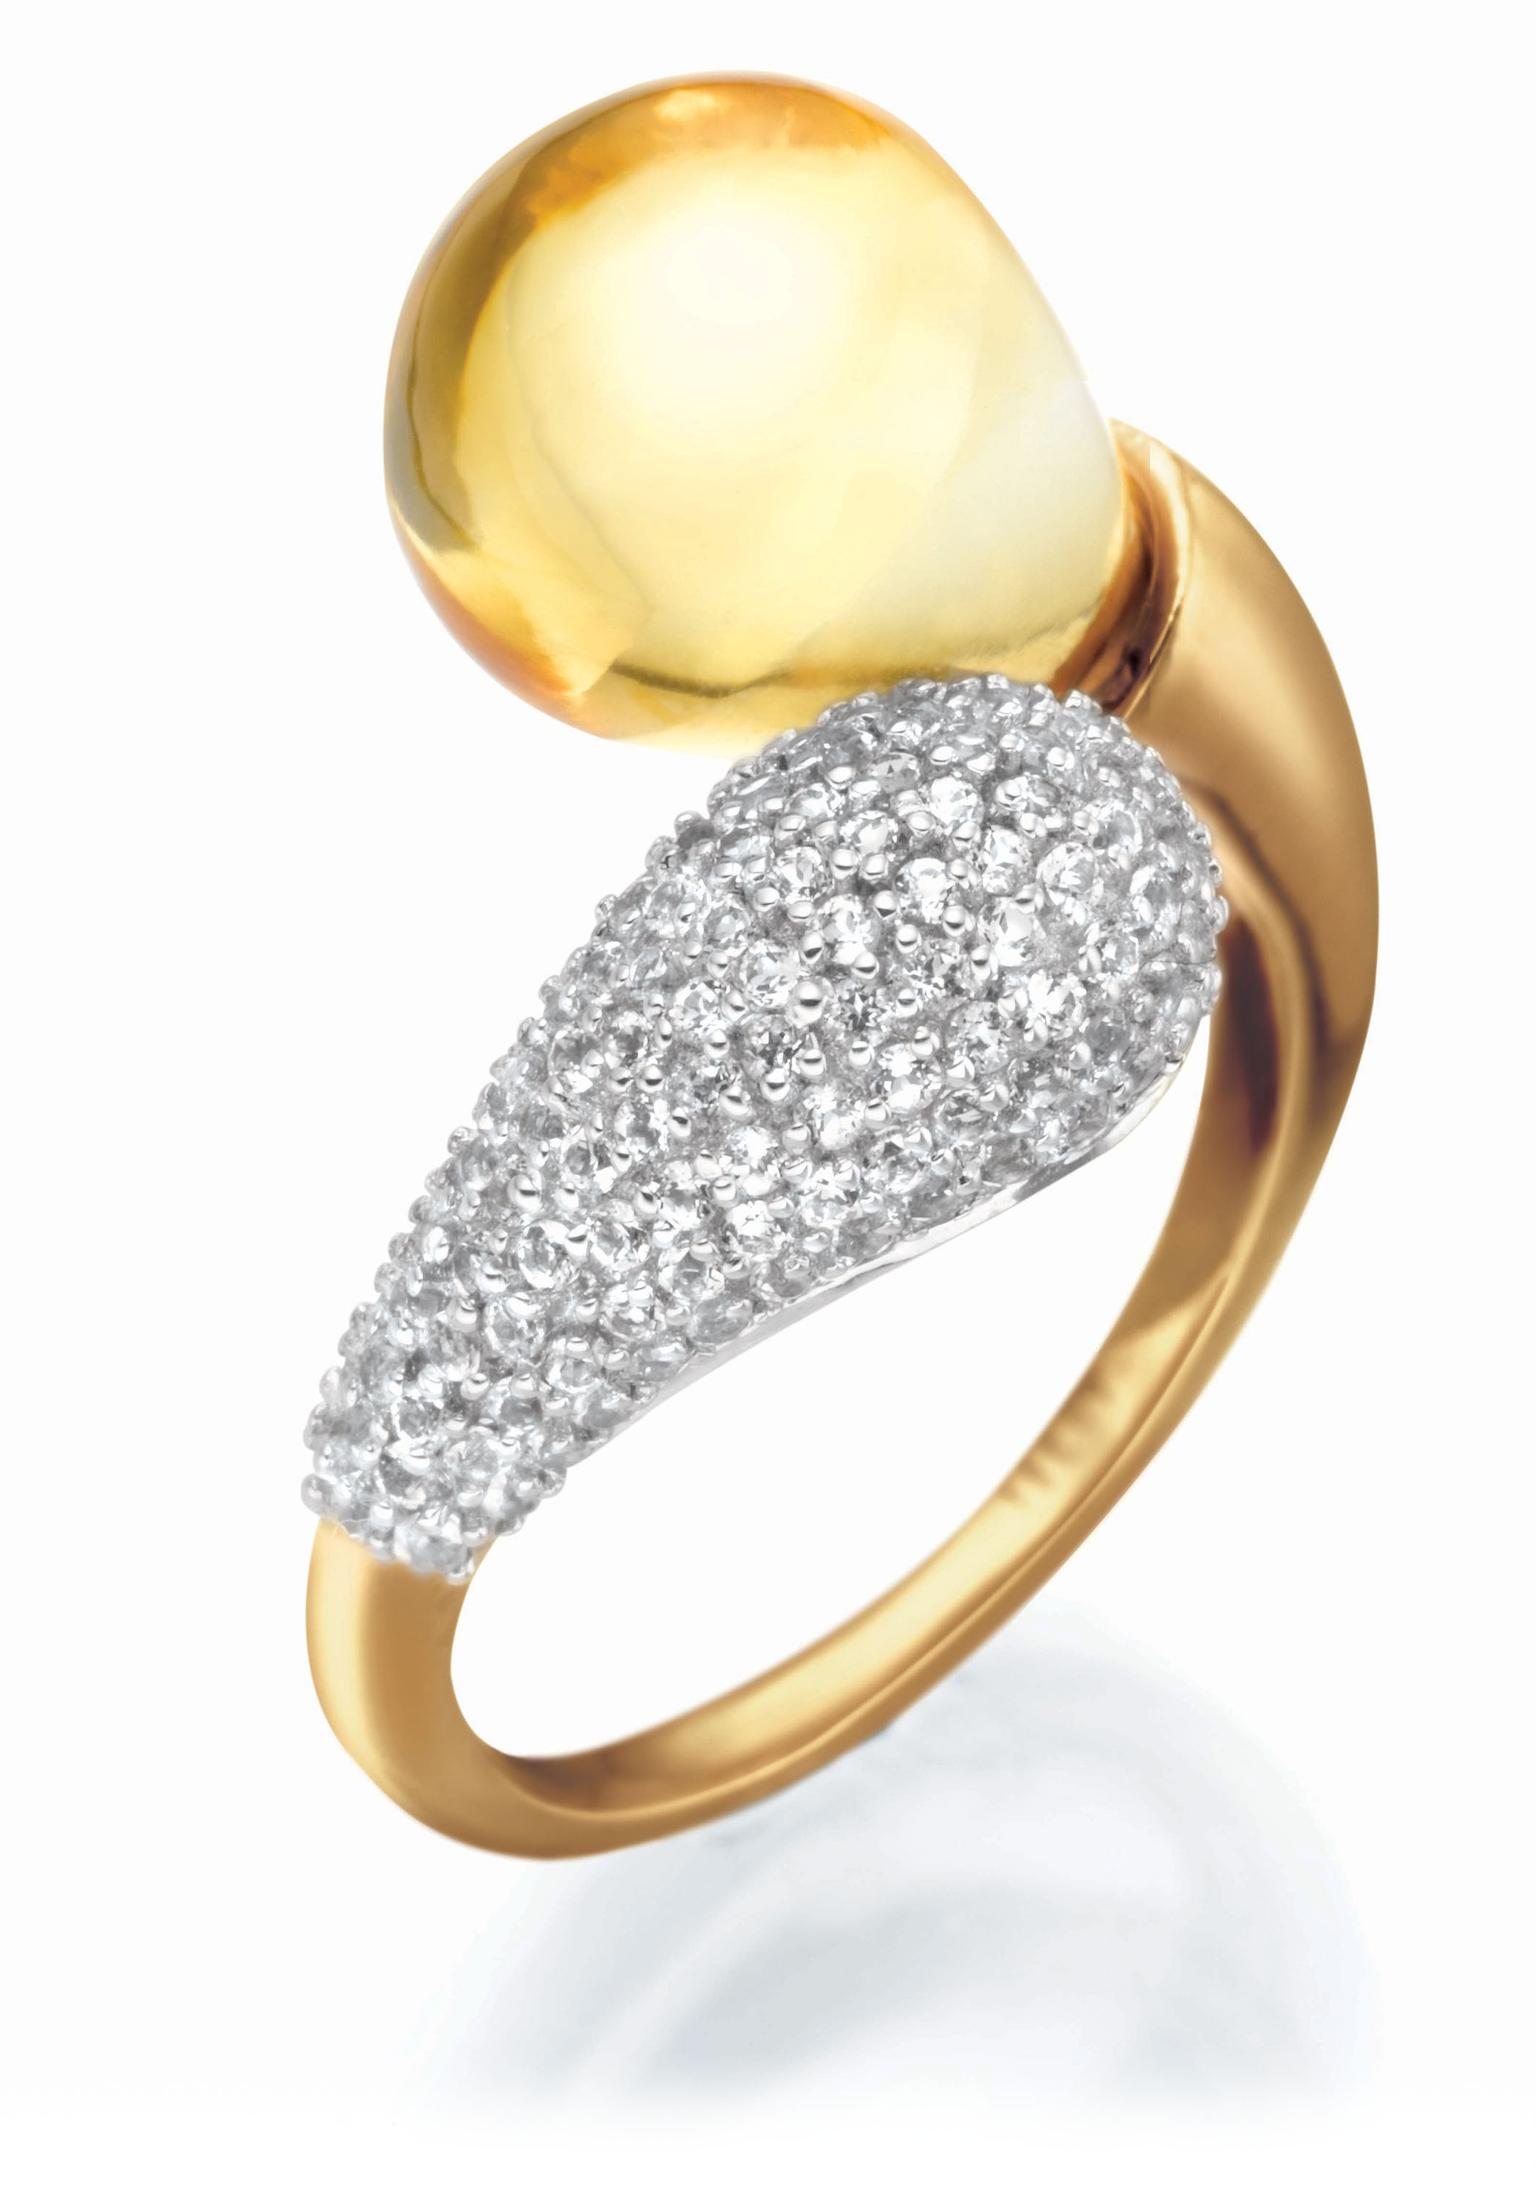 Debonair Solitaire Look Diamond Ring for Men